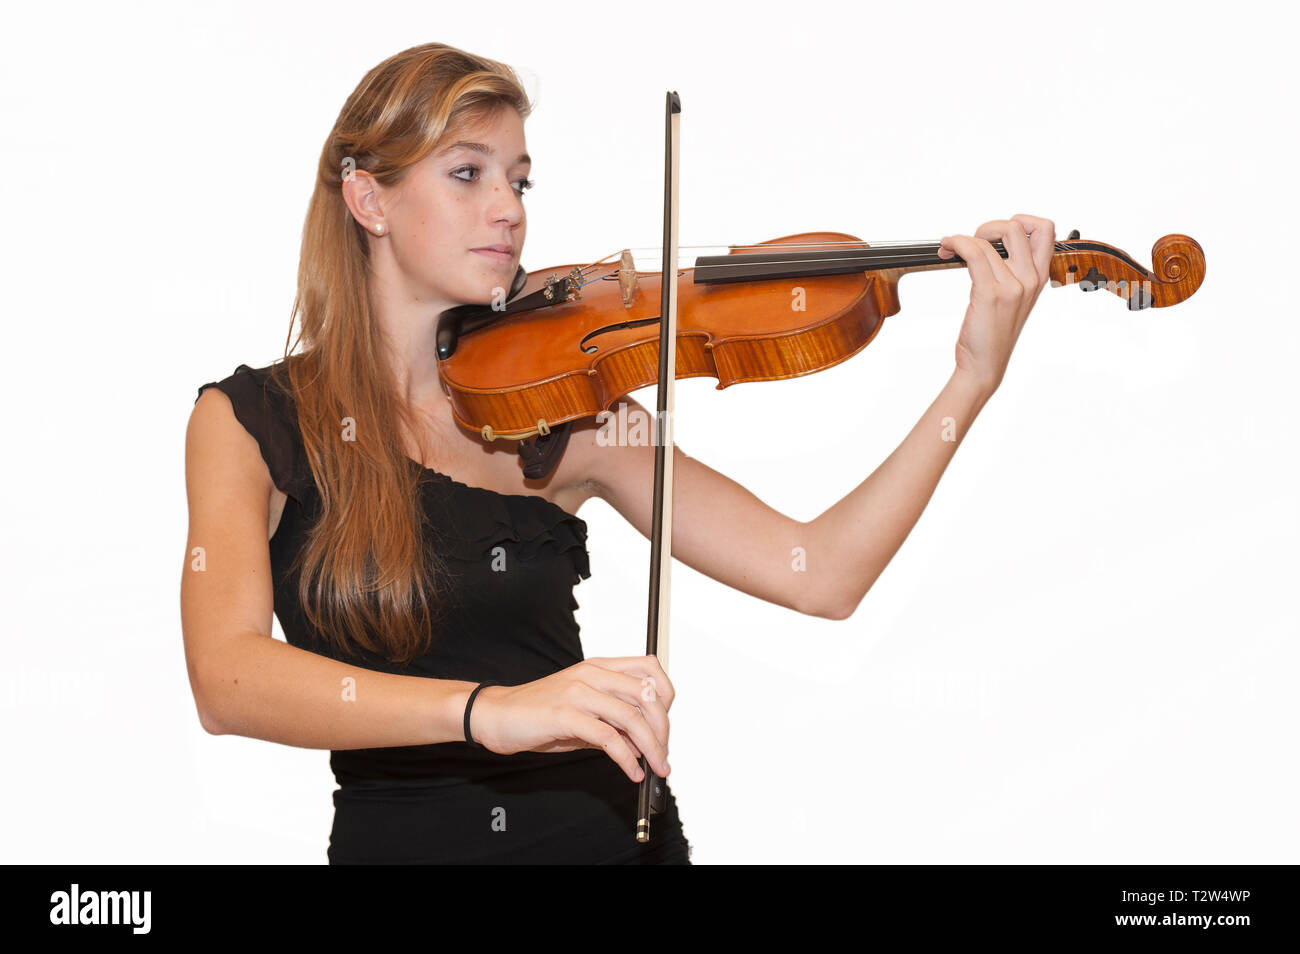 Giuseppe Verdi State Conservatory of Music in Turin Elena Crisman plays the viola Stock Photo